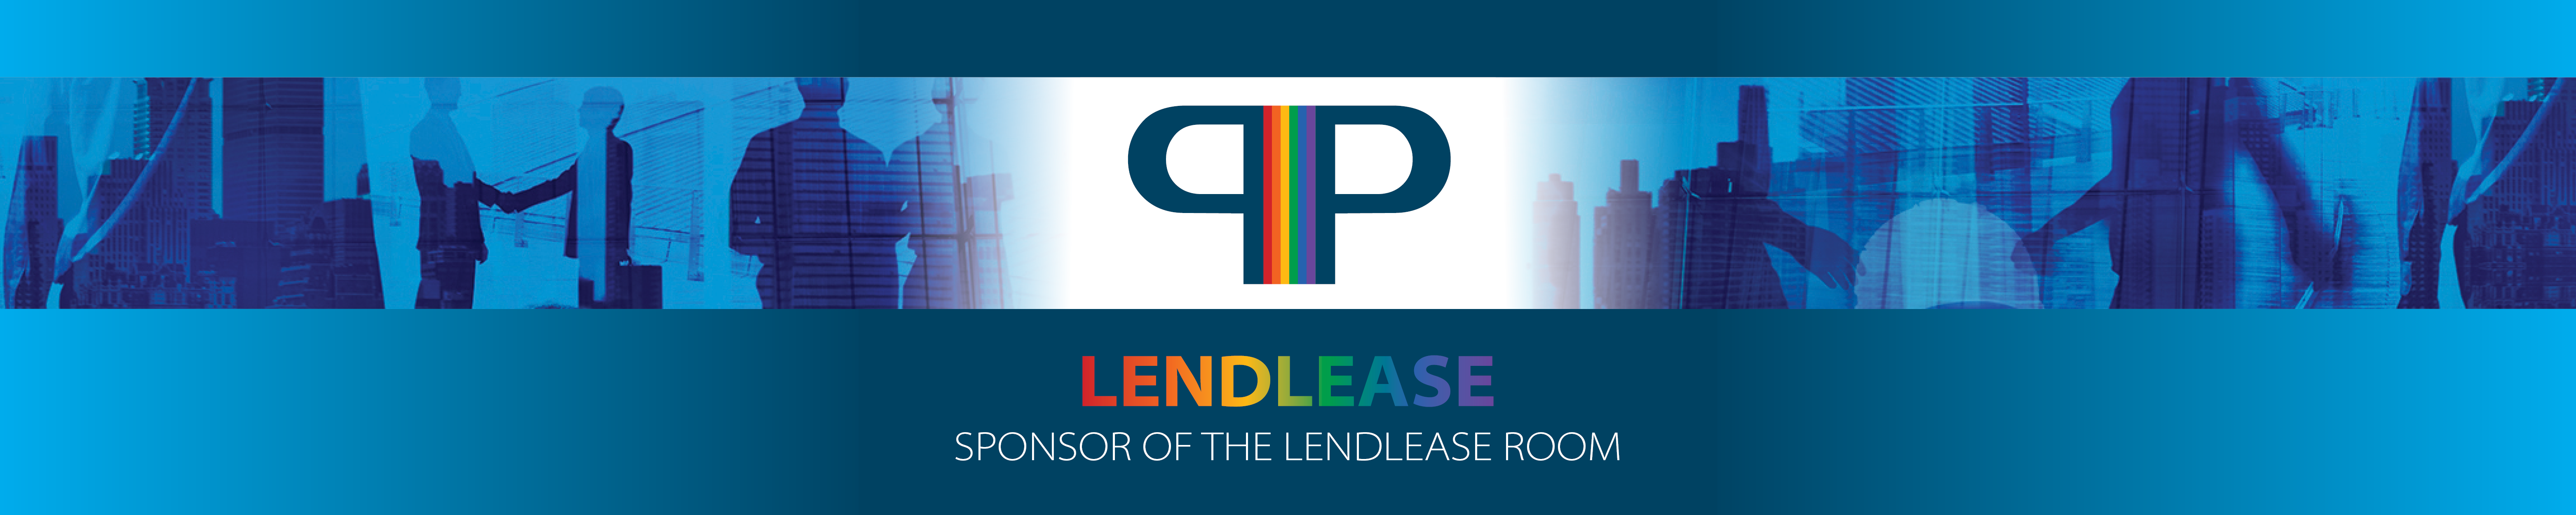 PIP_Conference_Sponsor_Lendlease